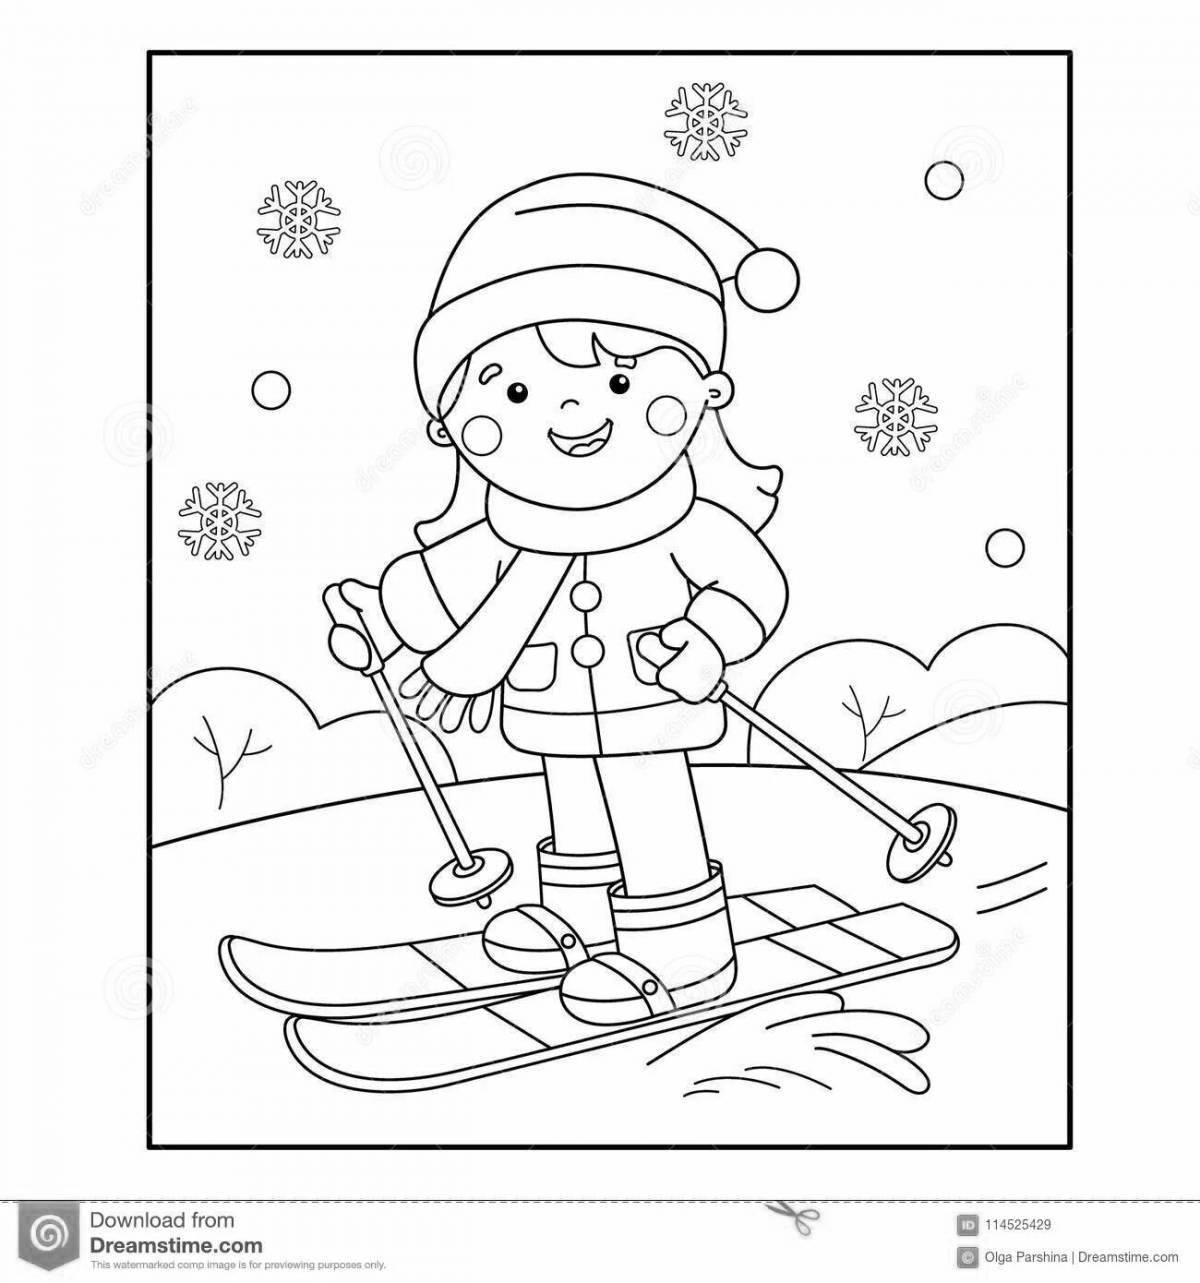 Jocular winter sports coloring book for kindergarten